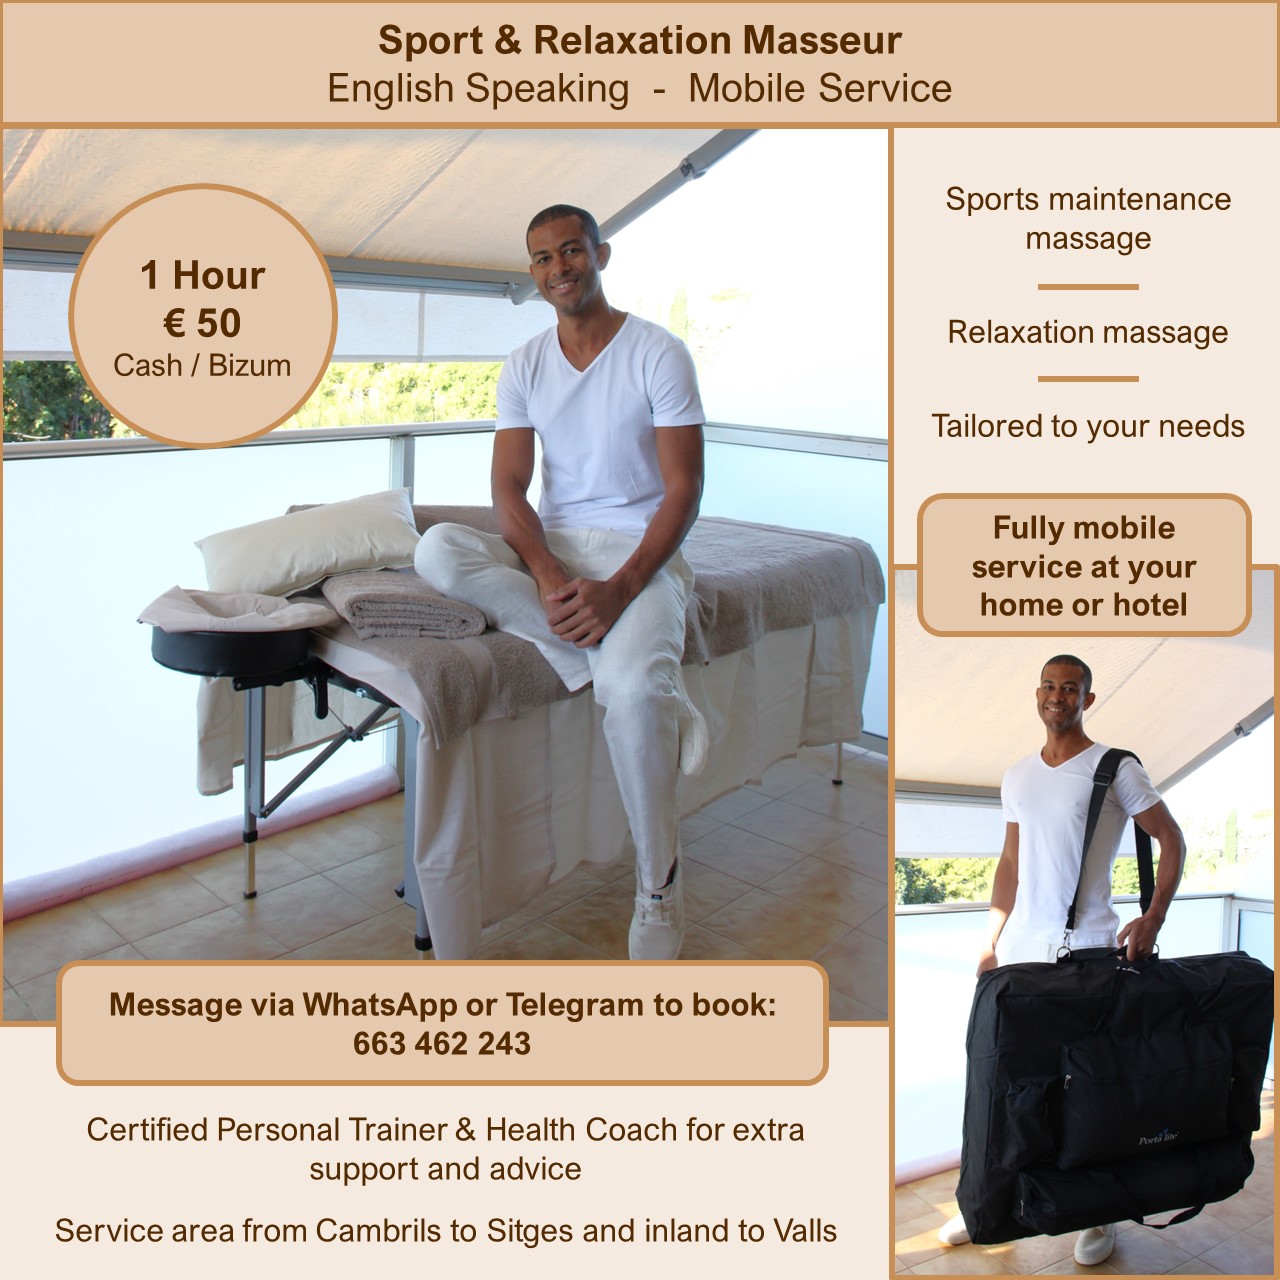 Mobile Sport & Relaxation Masseur